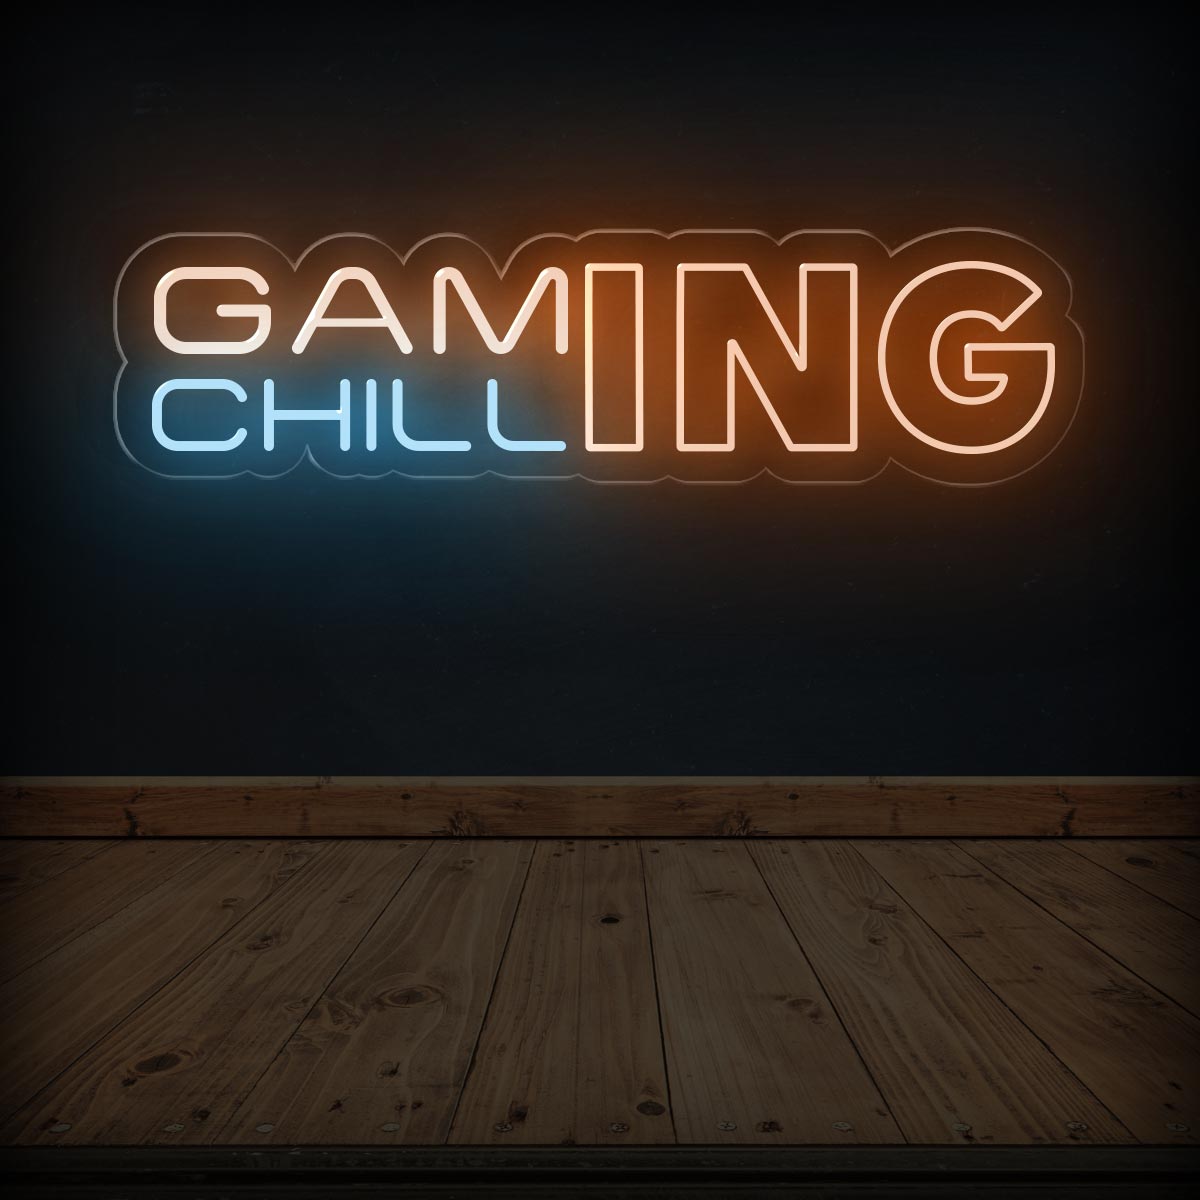 GAMING CHILLING - Game Room Neon Sign - LED Light Decor - NEONXPERT